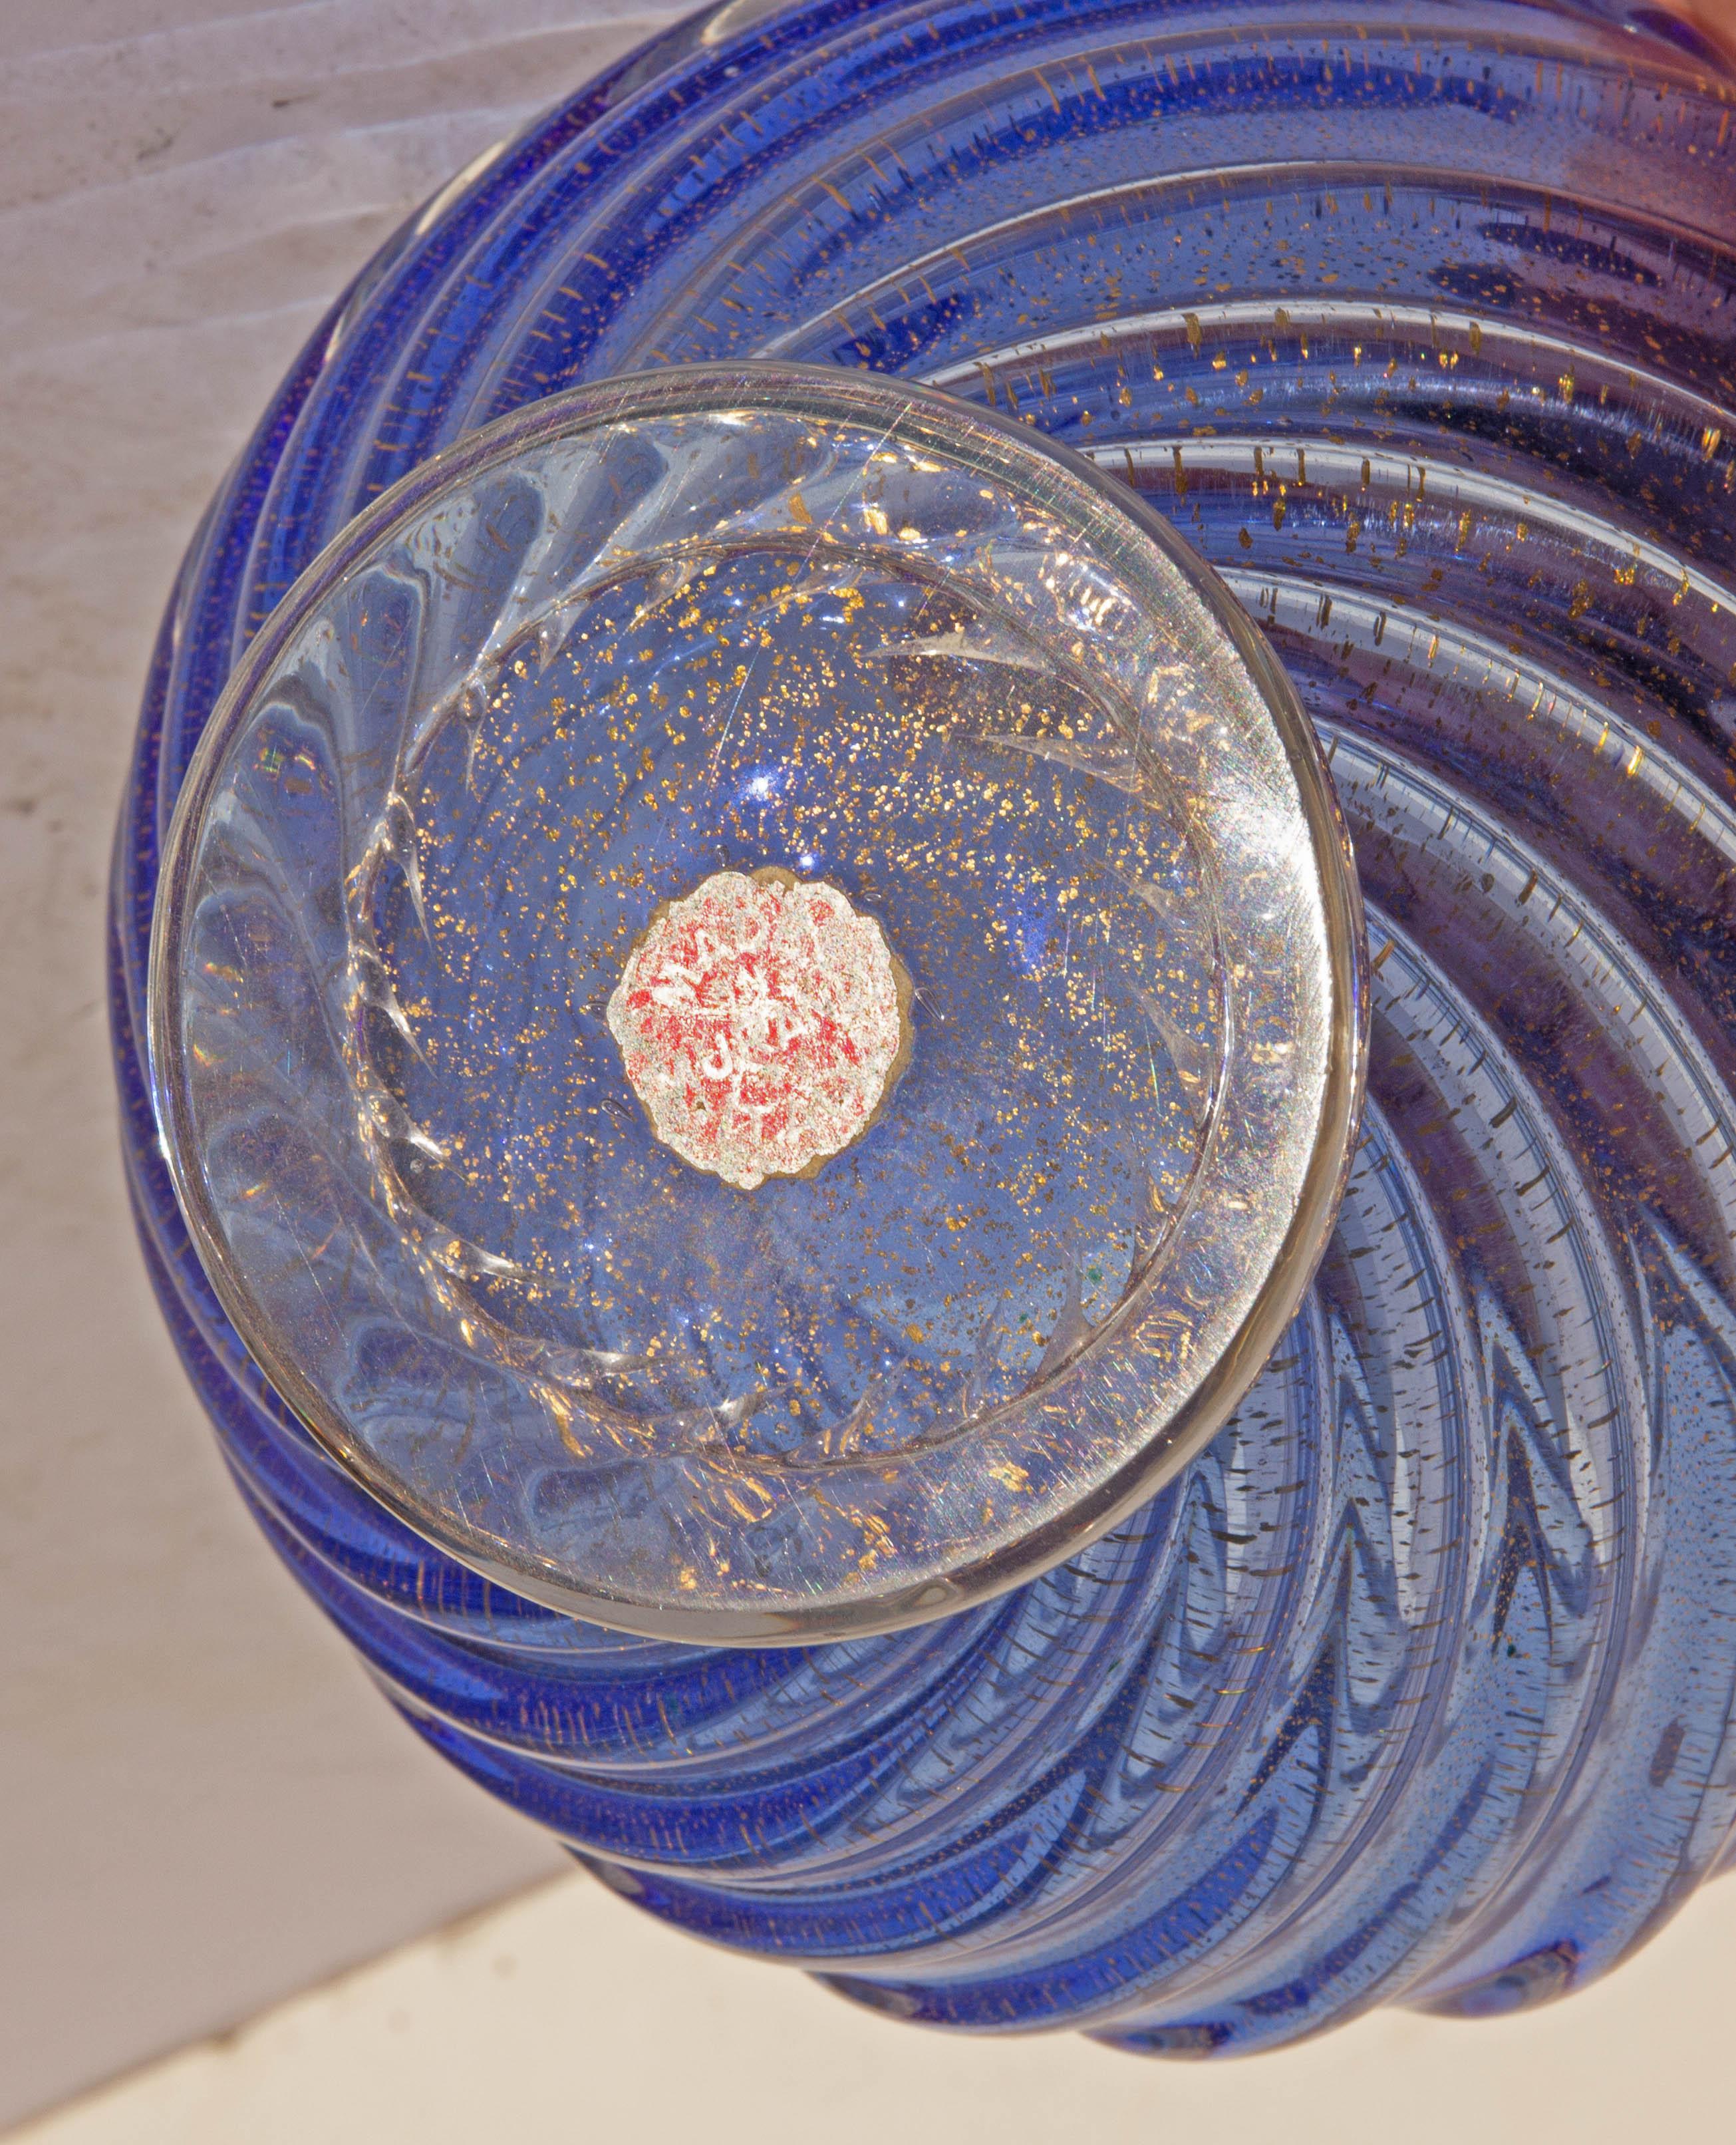 Italian Vintage Murano Glass Vase